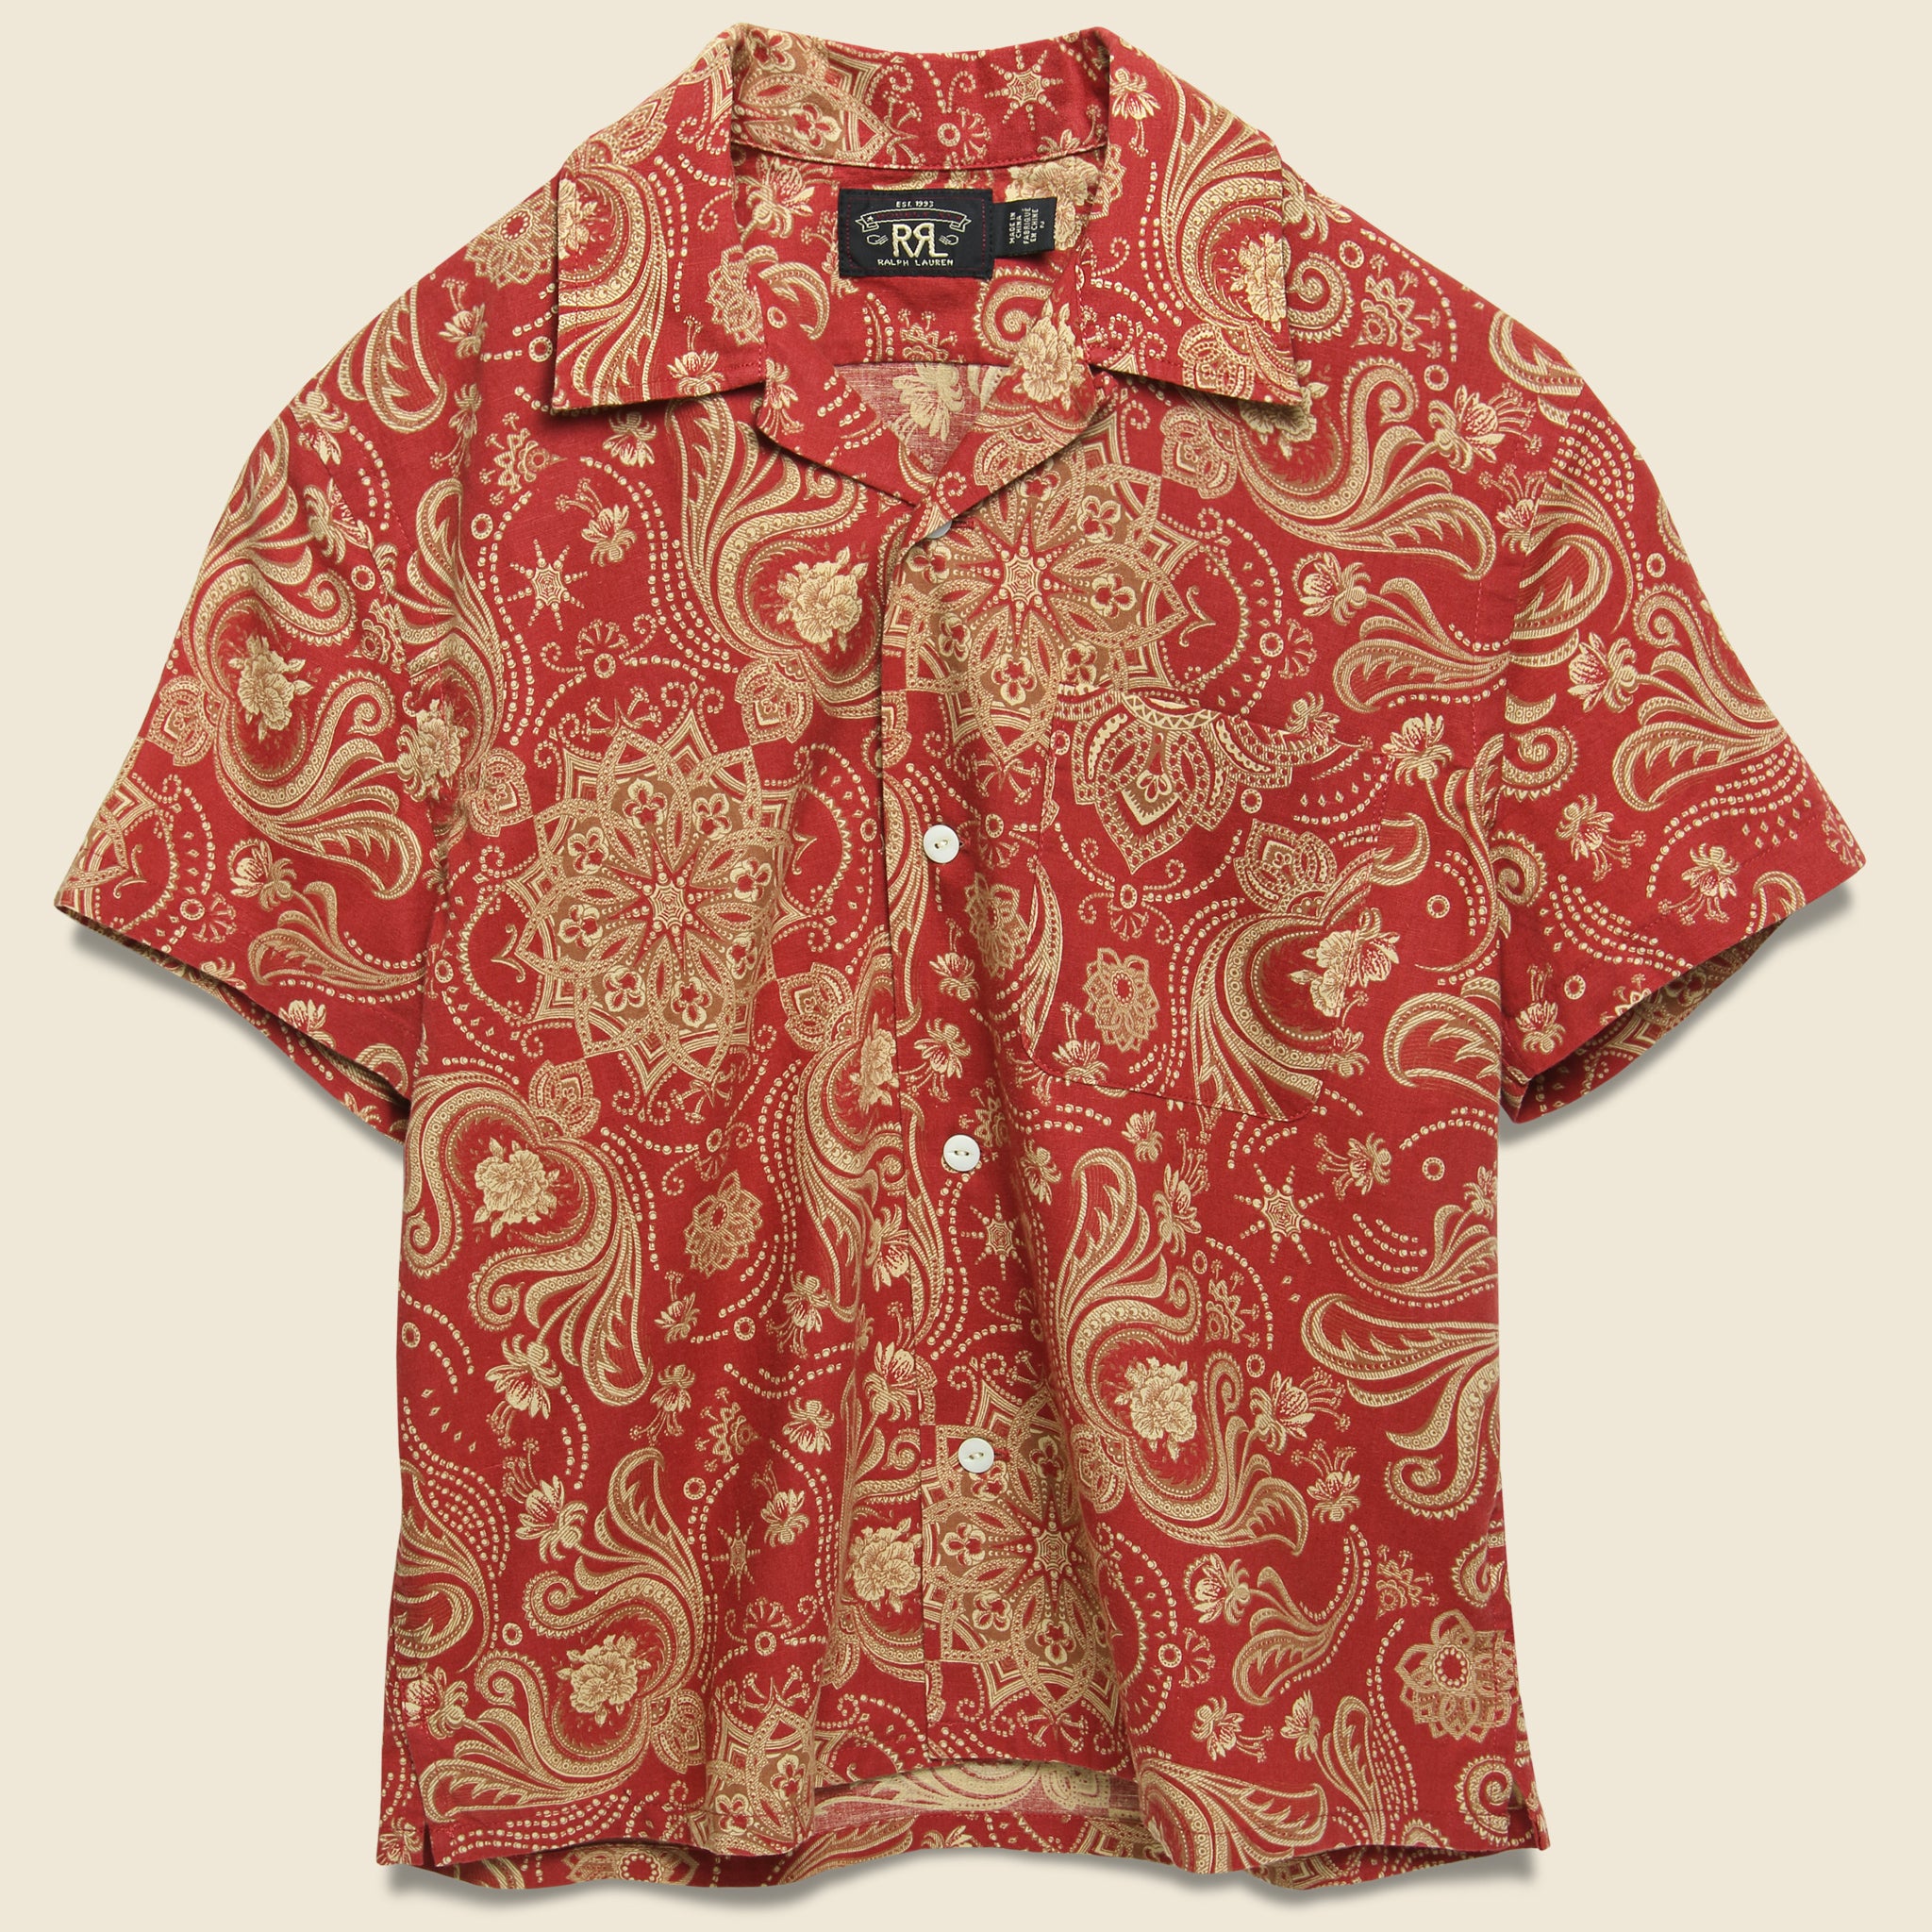 Cotton-Linen Camp Shirt - Bandana